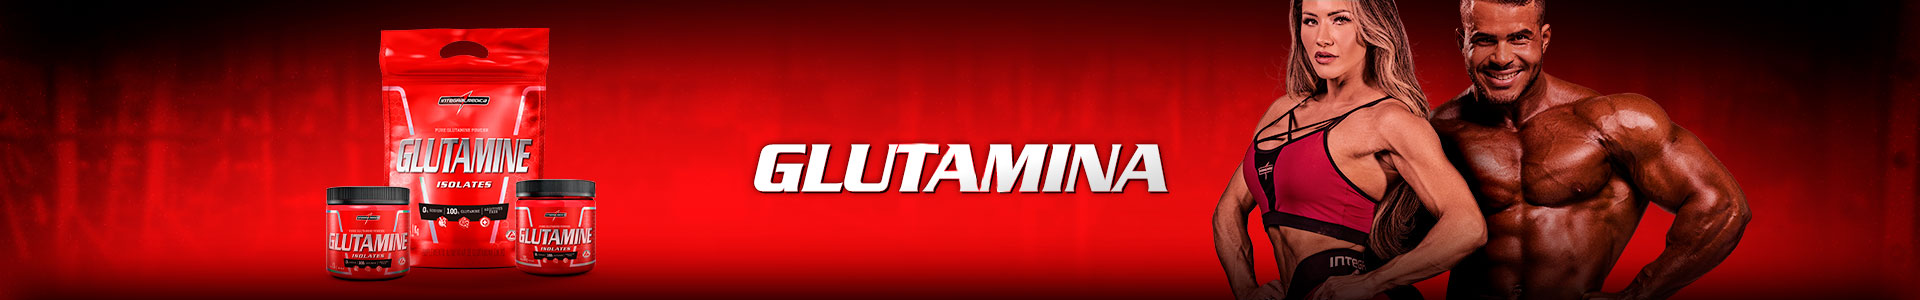 Banner - Glutamina - Desktop